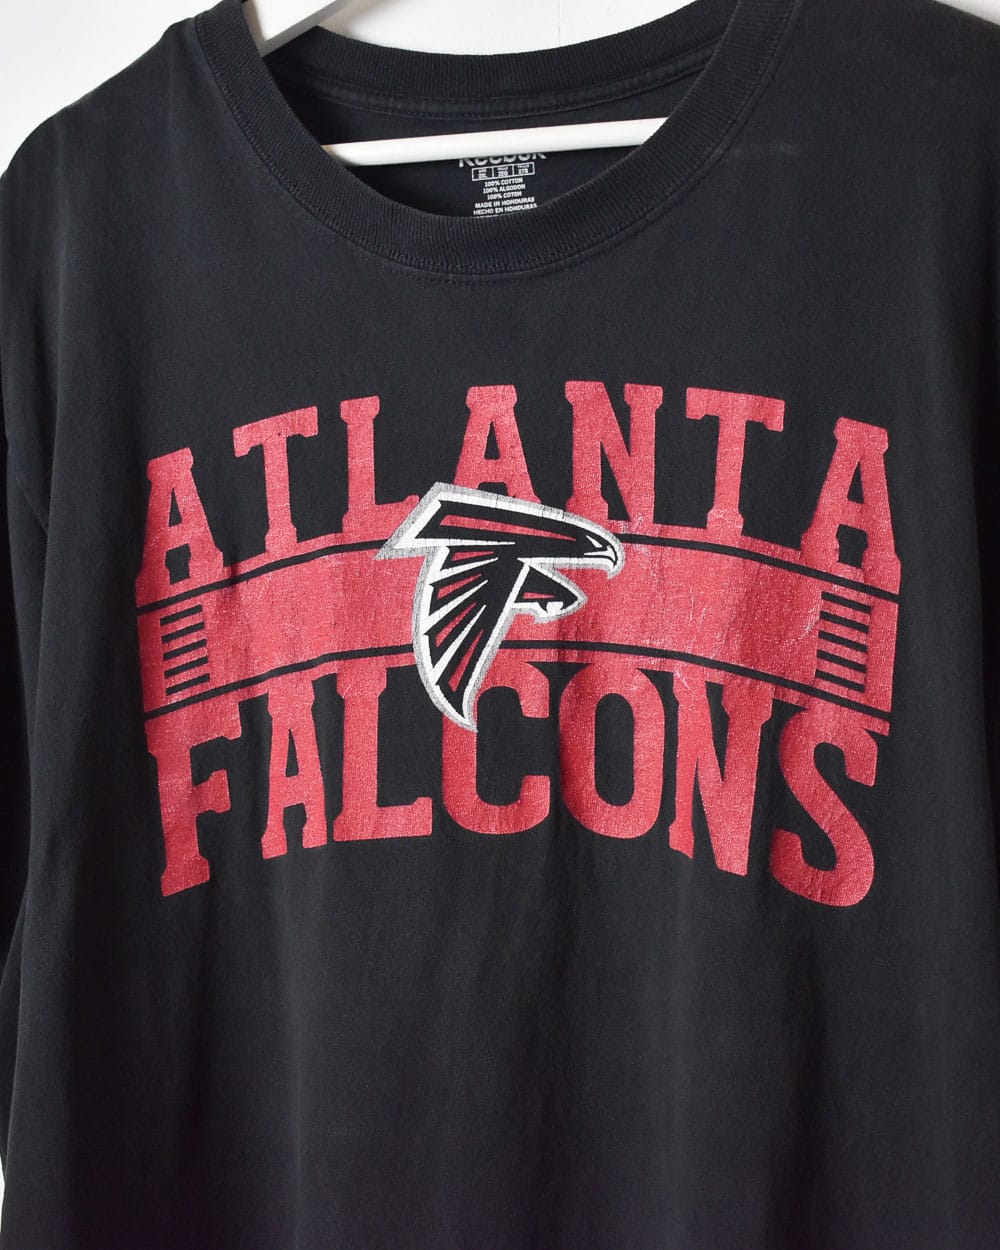 Black Reebok Atlanta Falcons T-Shirt - XX-Large